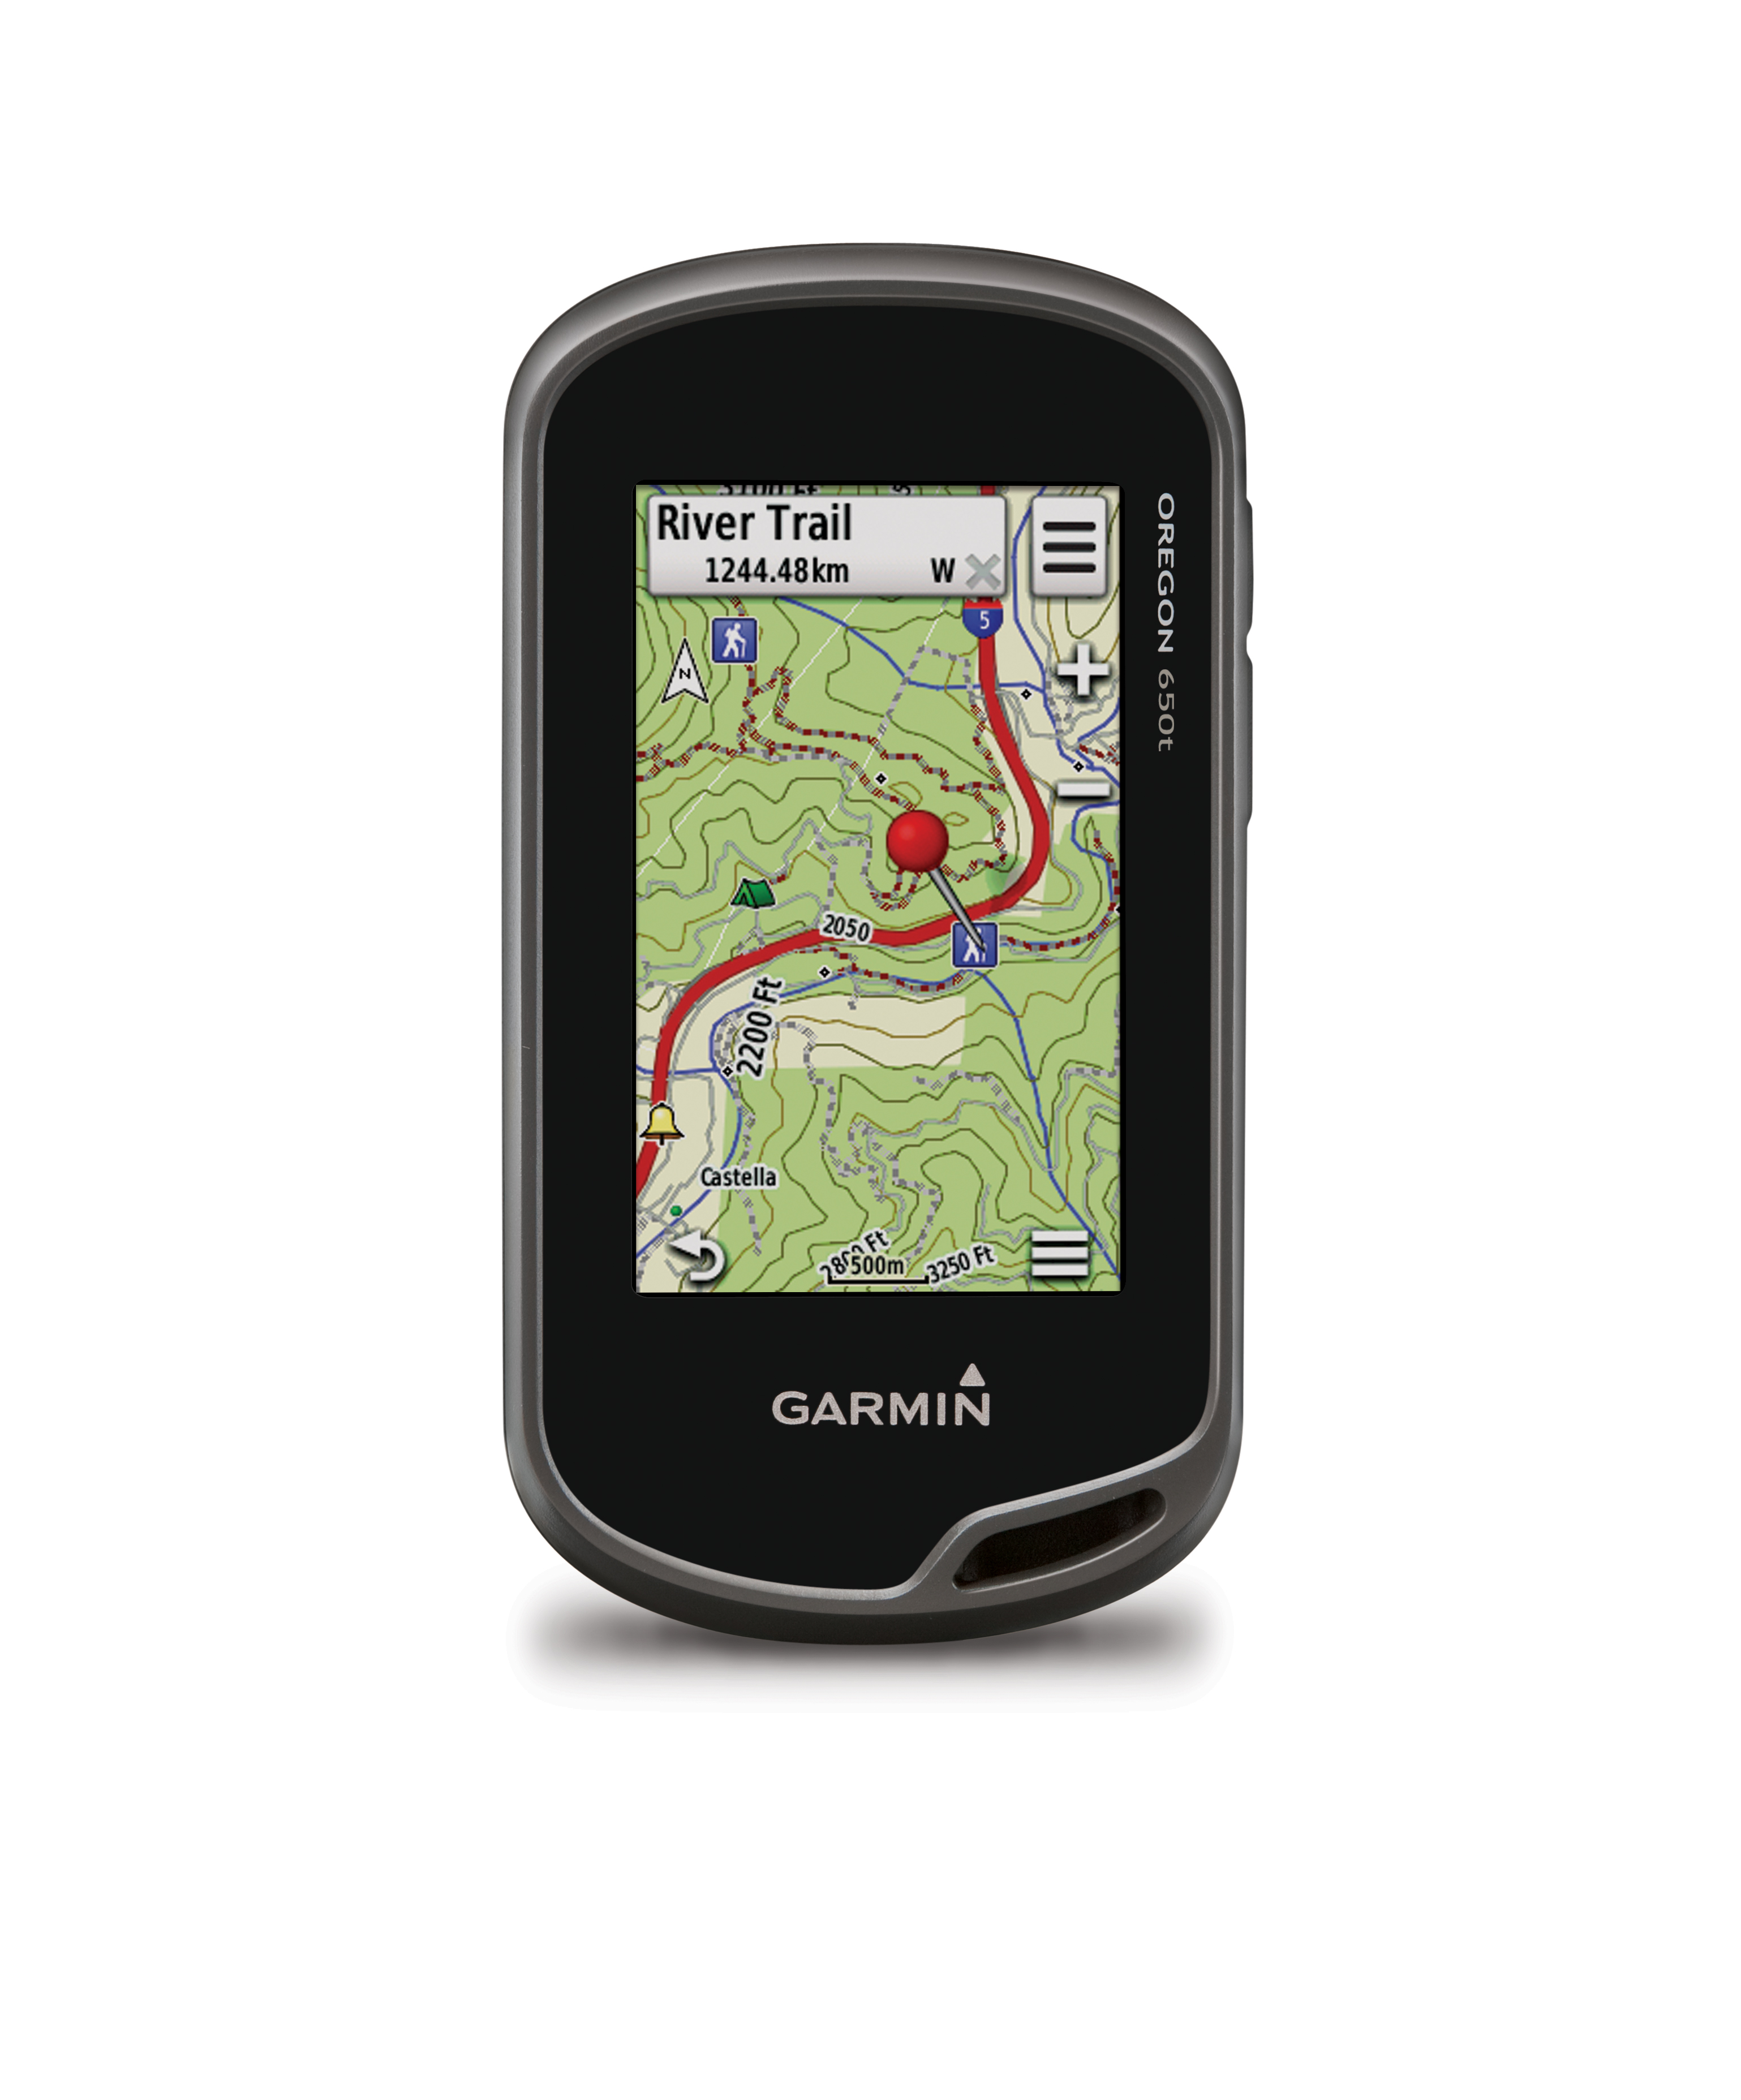 Garmin Oregon en 650 extra informatie - GPS Wijzer